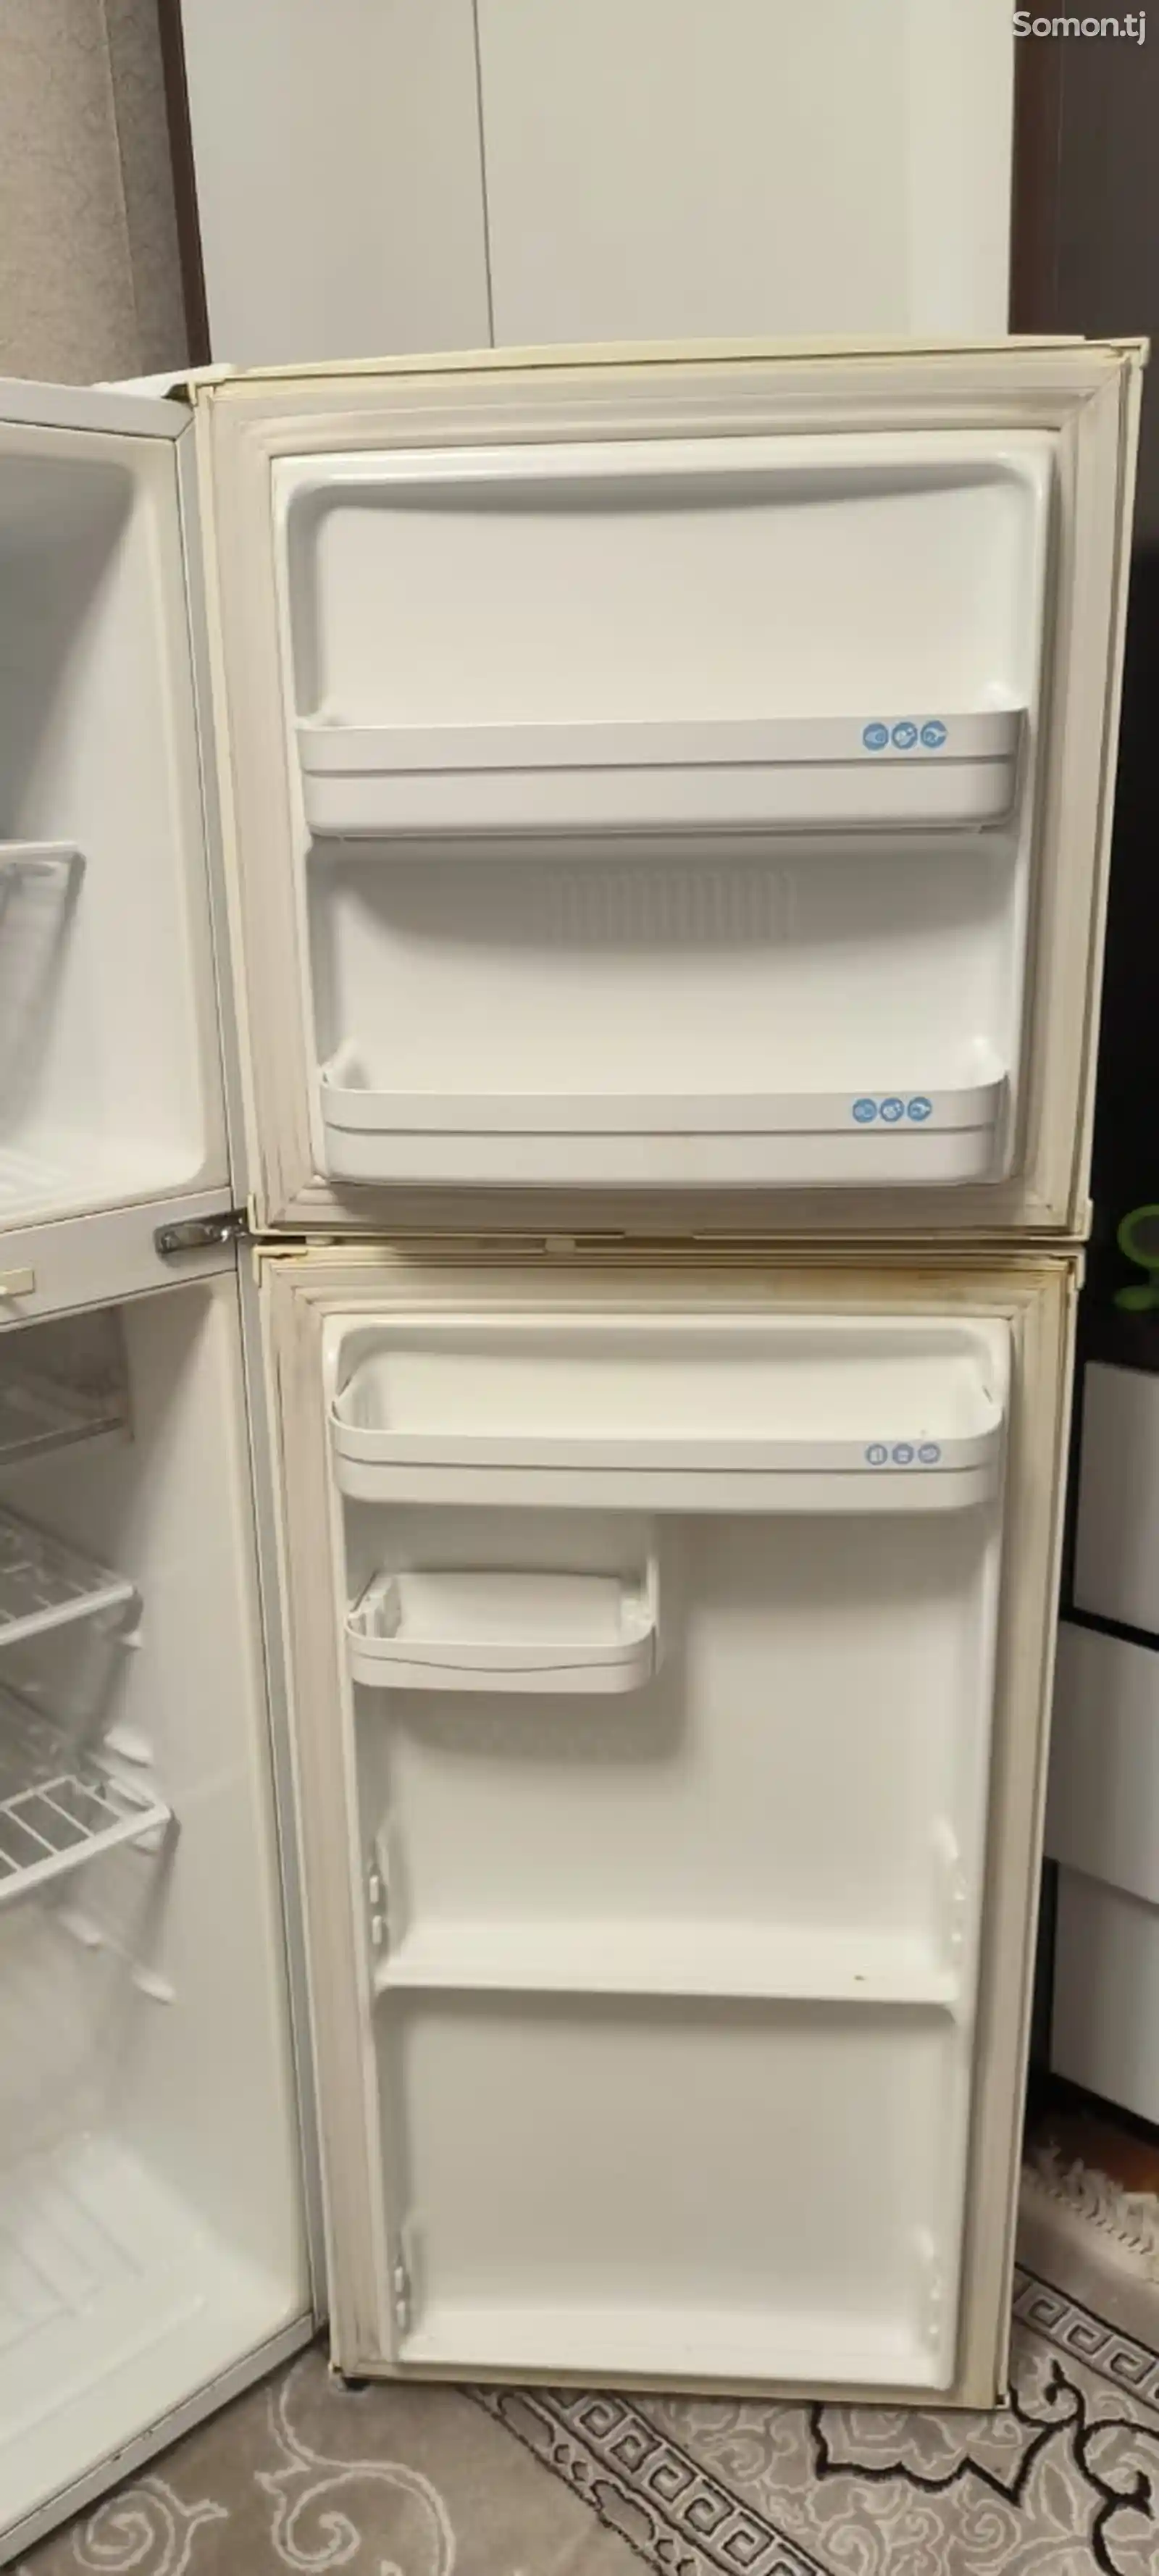 Рабочий холодильник марки LG-5